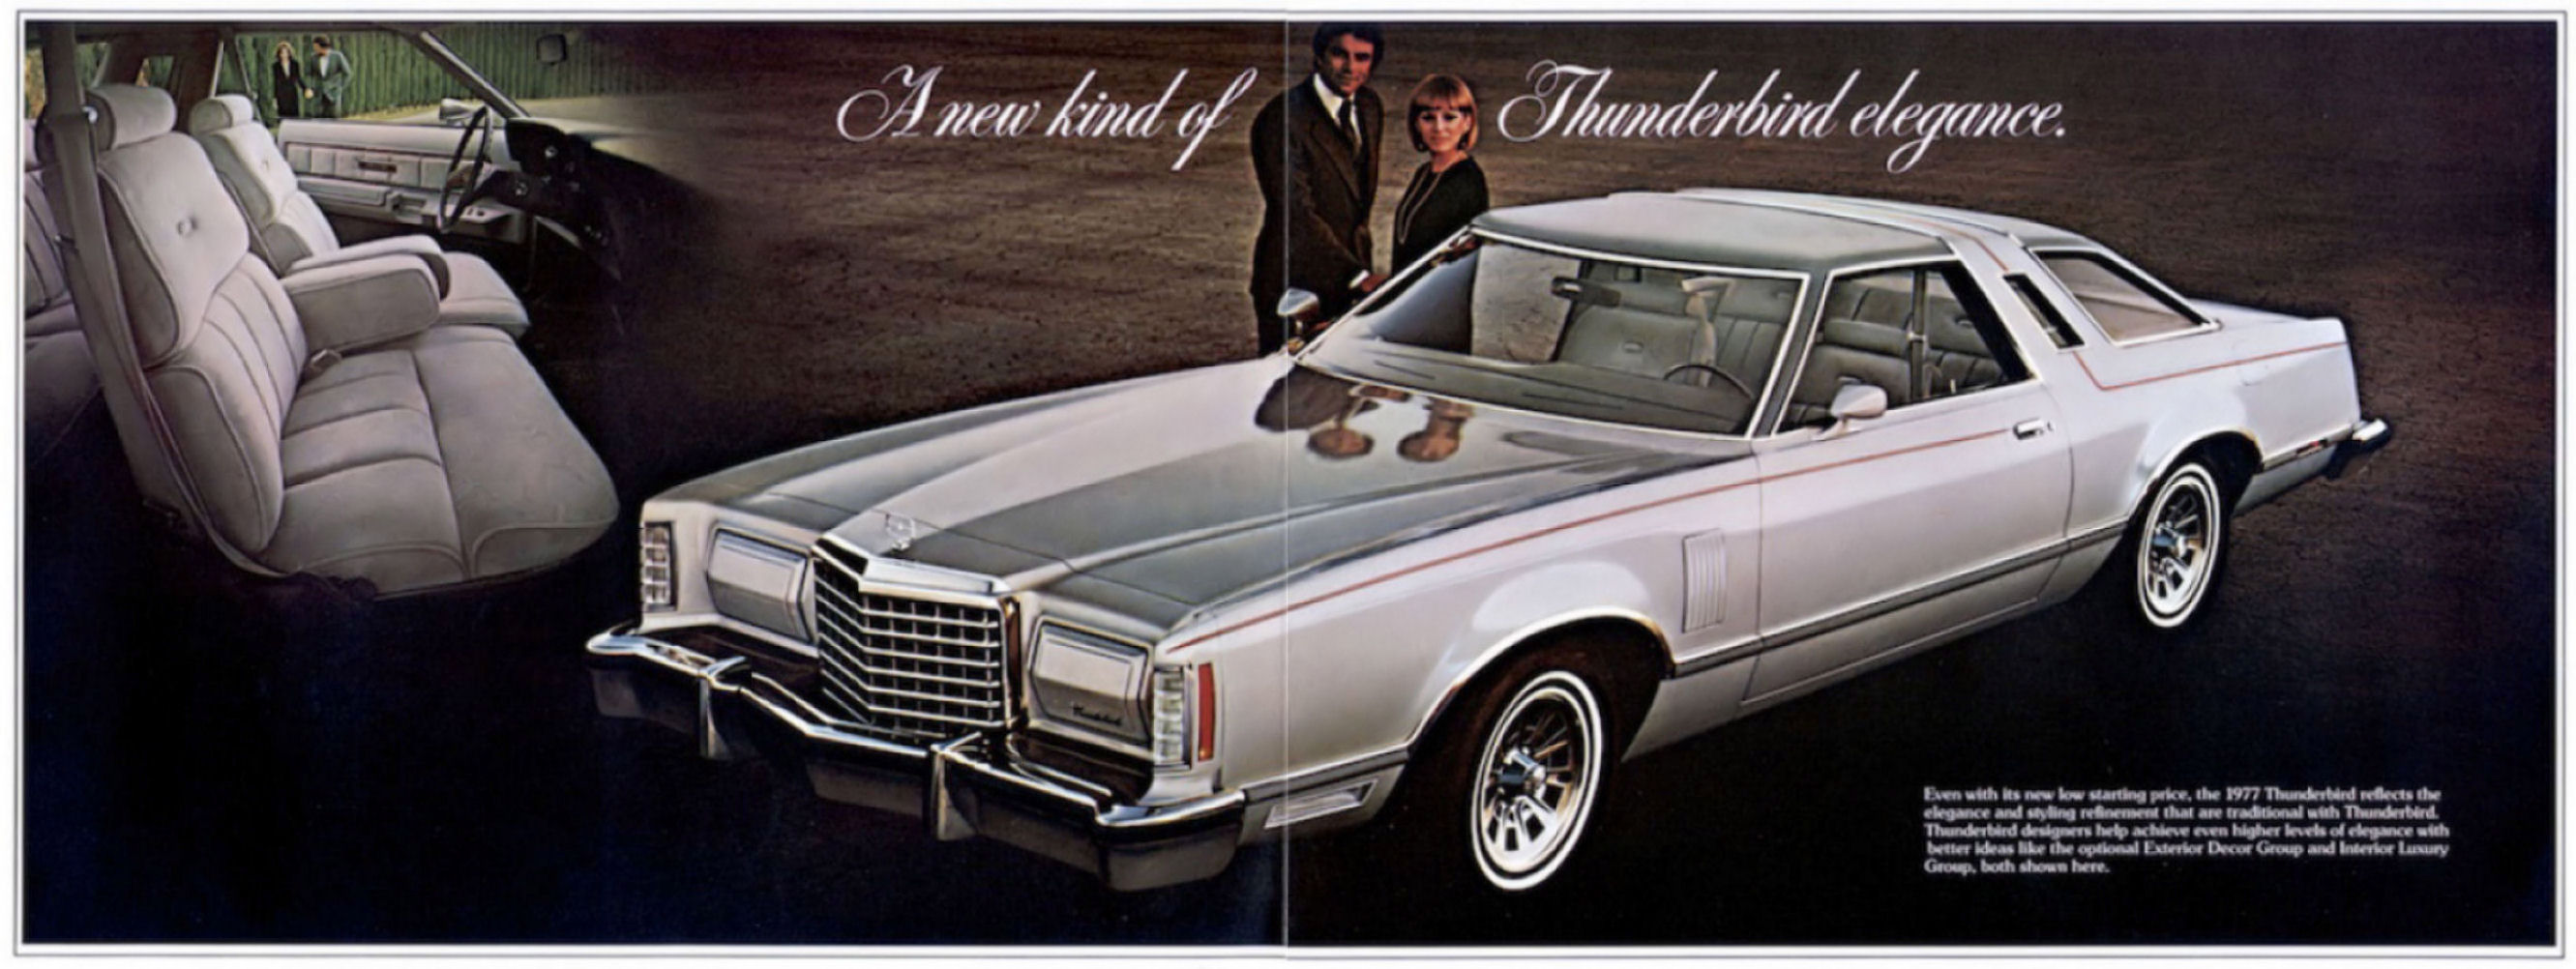 1977_Ford_Thunderbird_Mailer-04-05